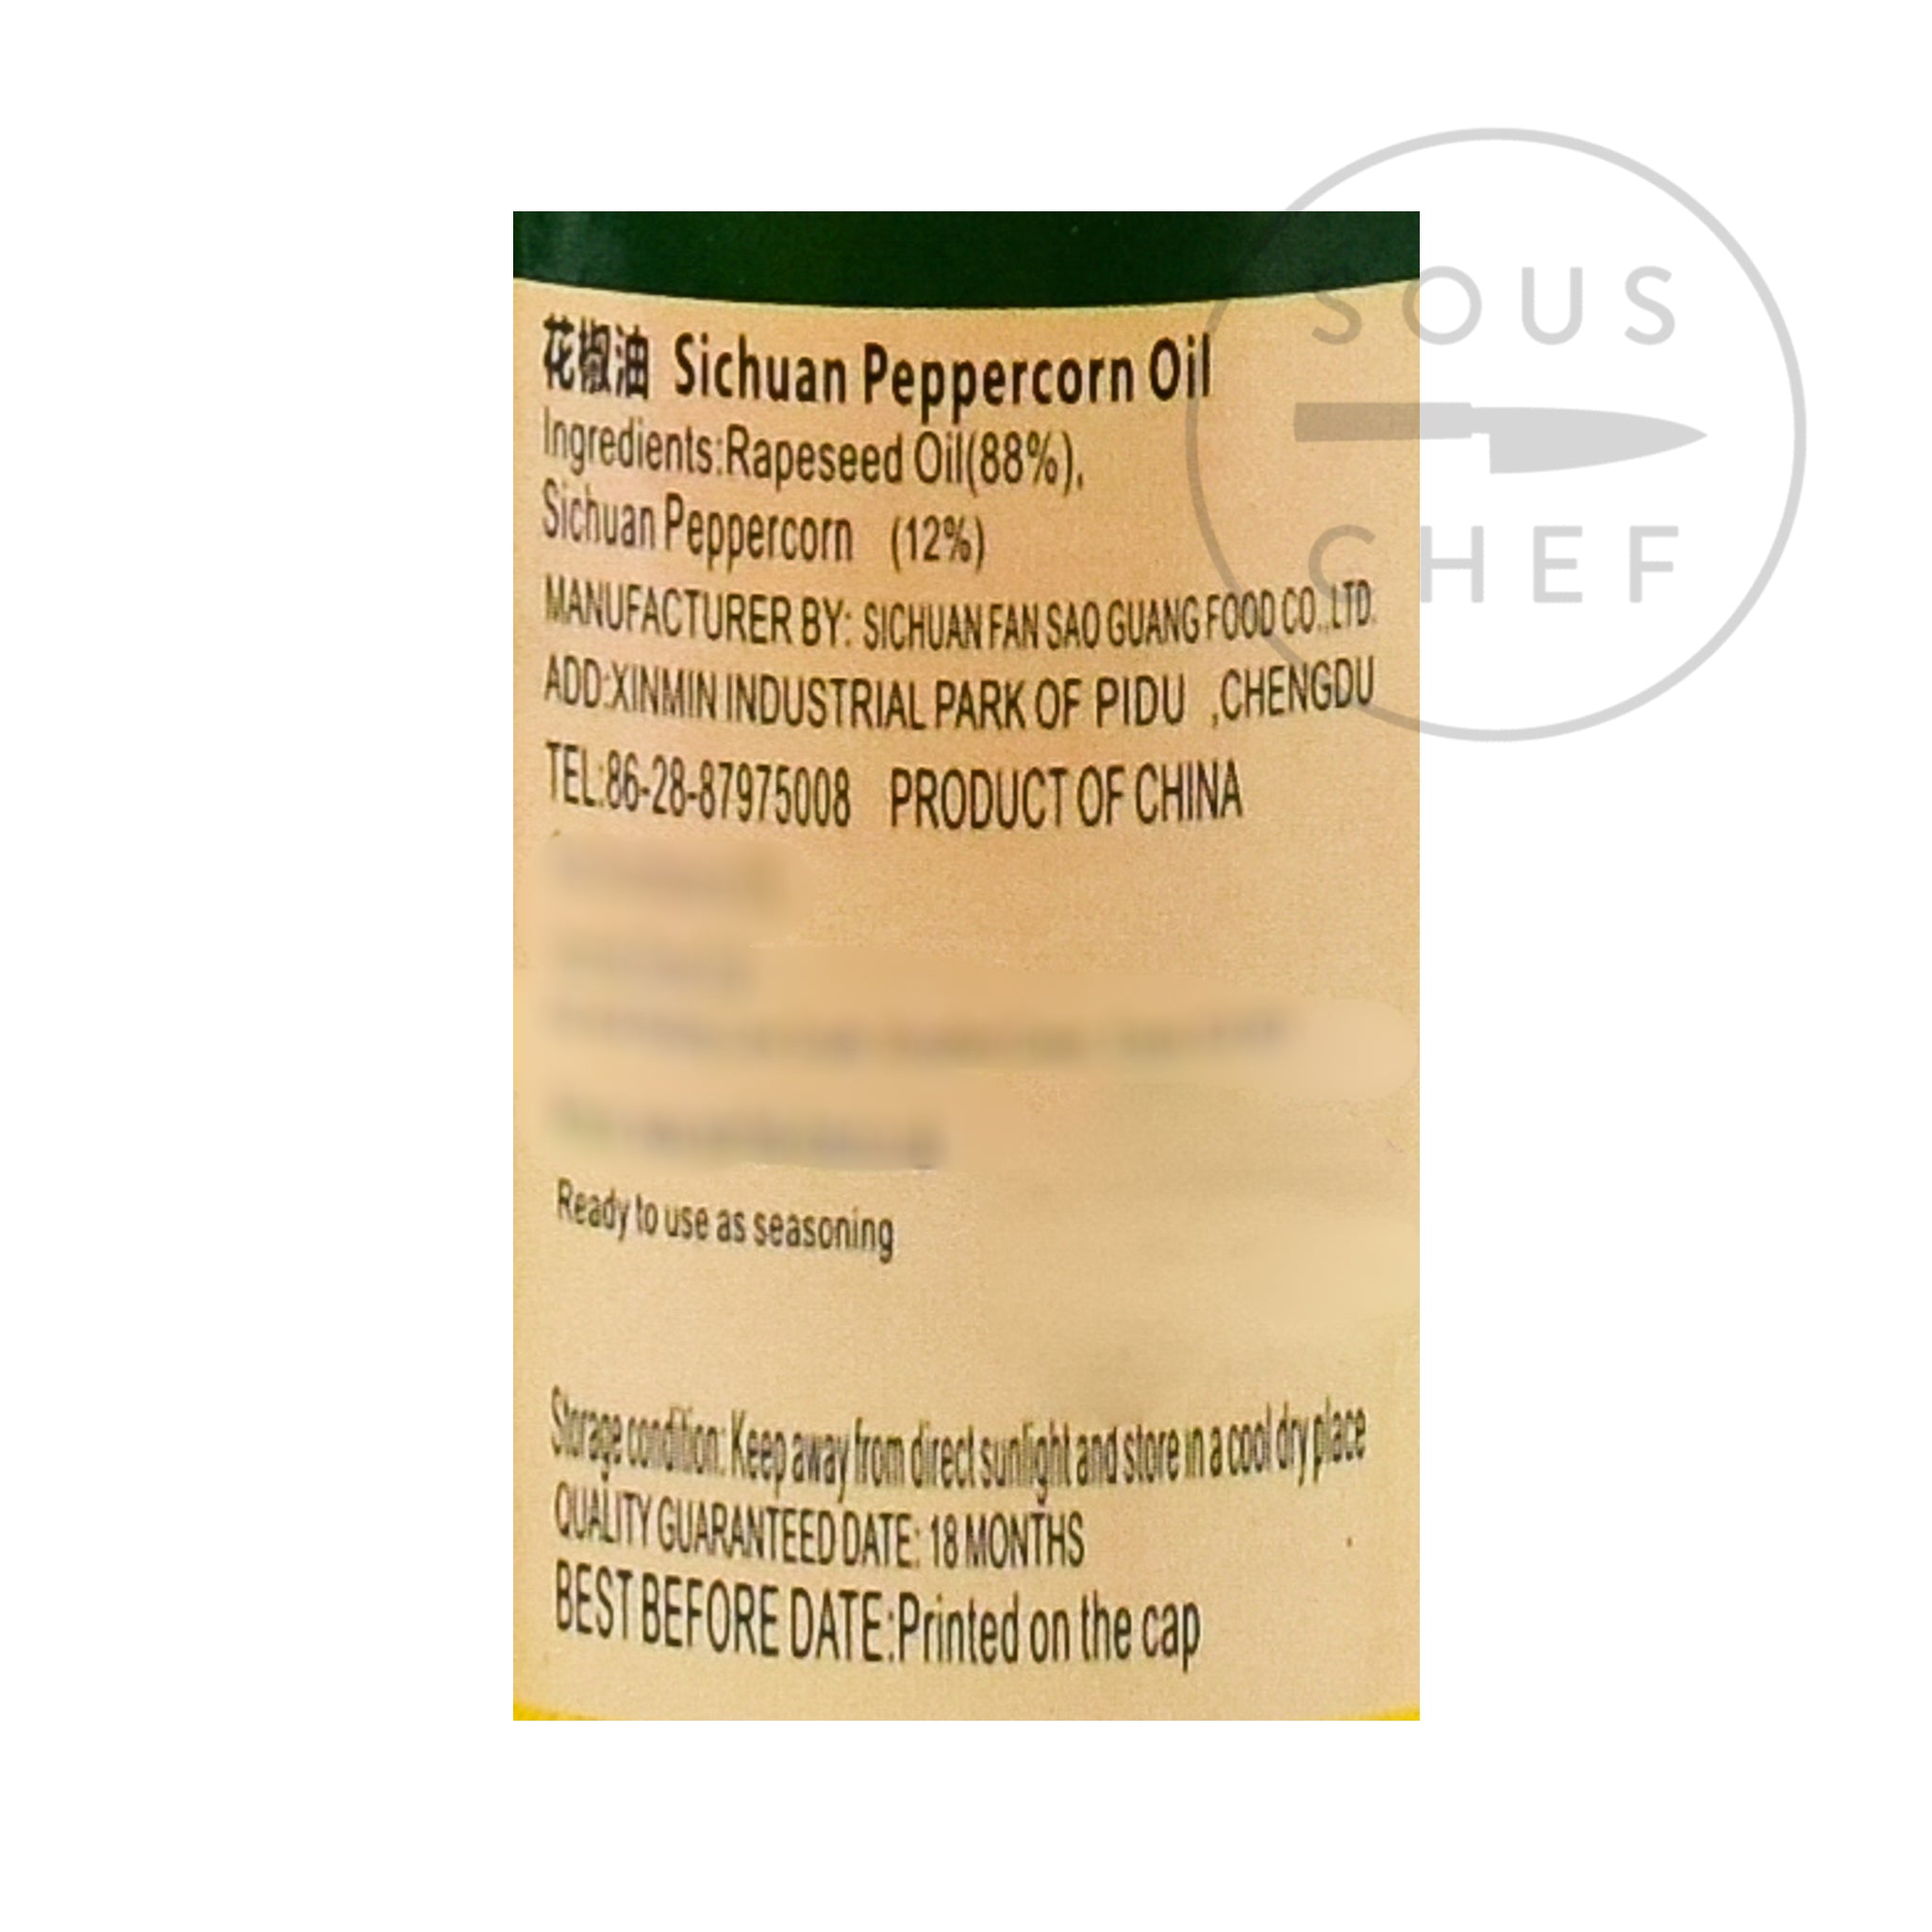 Sichuan Peppercorn Oil - Prickly Oil 210ml ingredients